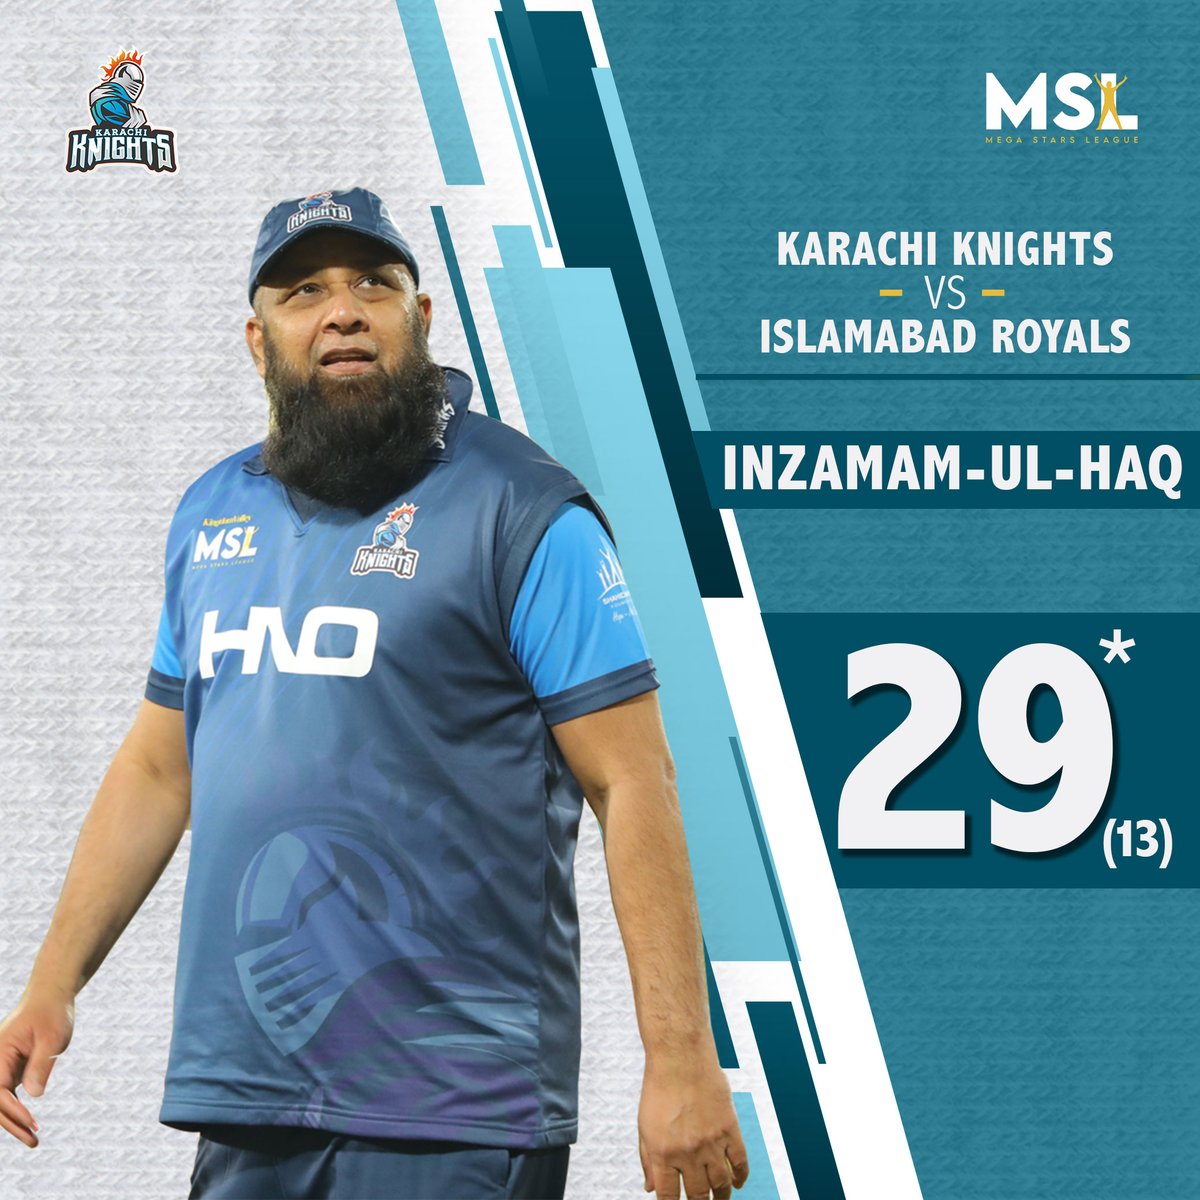 WHAT A MATCH IT WAS! 💯🤩
Throwback to Karachi Knights vs Islamabad Royals match when Inzamam-ul-Haq made 29 runs off 13 balls in Mega Stars League.

#MegaStarsLeague #Cricketainment #ShahidAfridi #KarachiKnights #cricketfever #cricketlovers